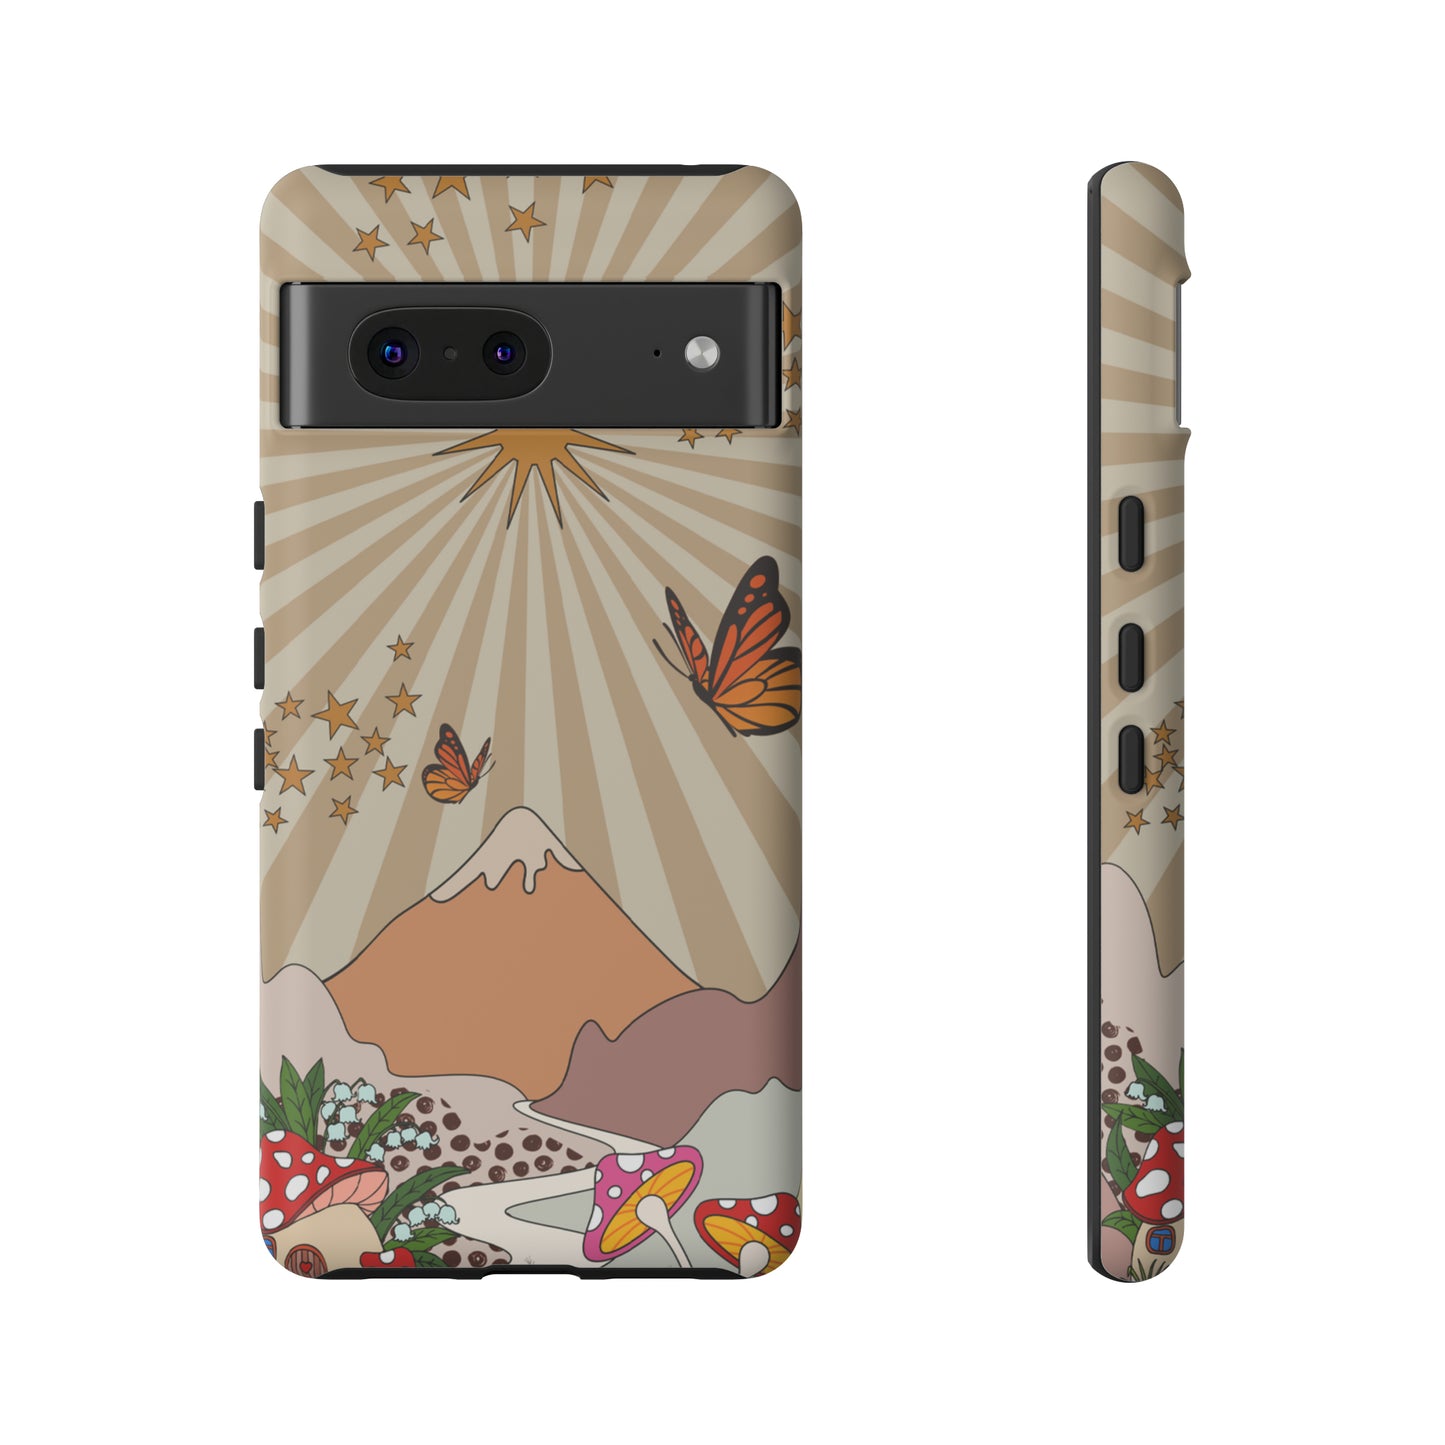 Sun Valley | Hardshell Dual Layer Phone Case